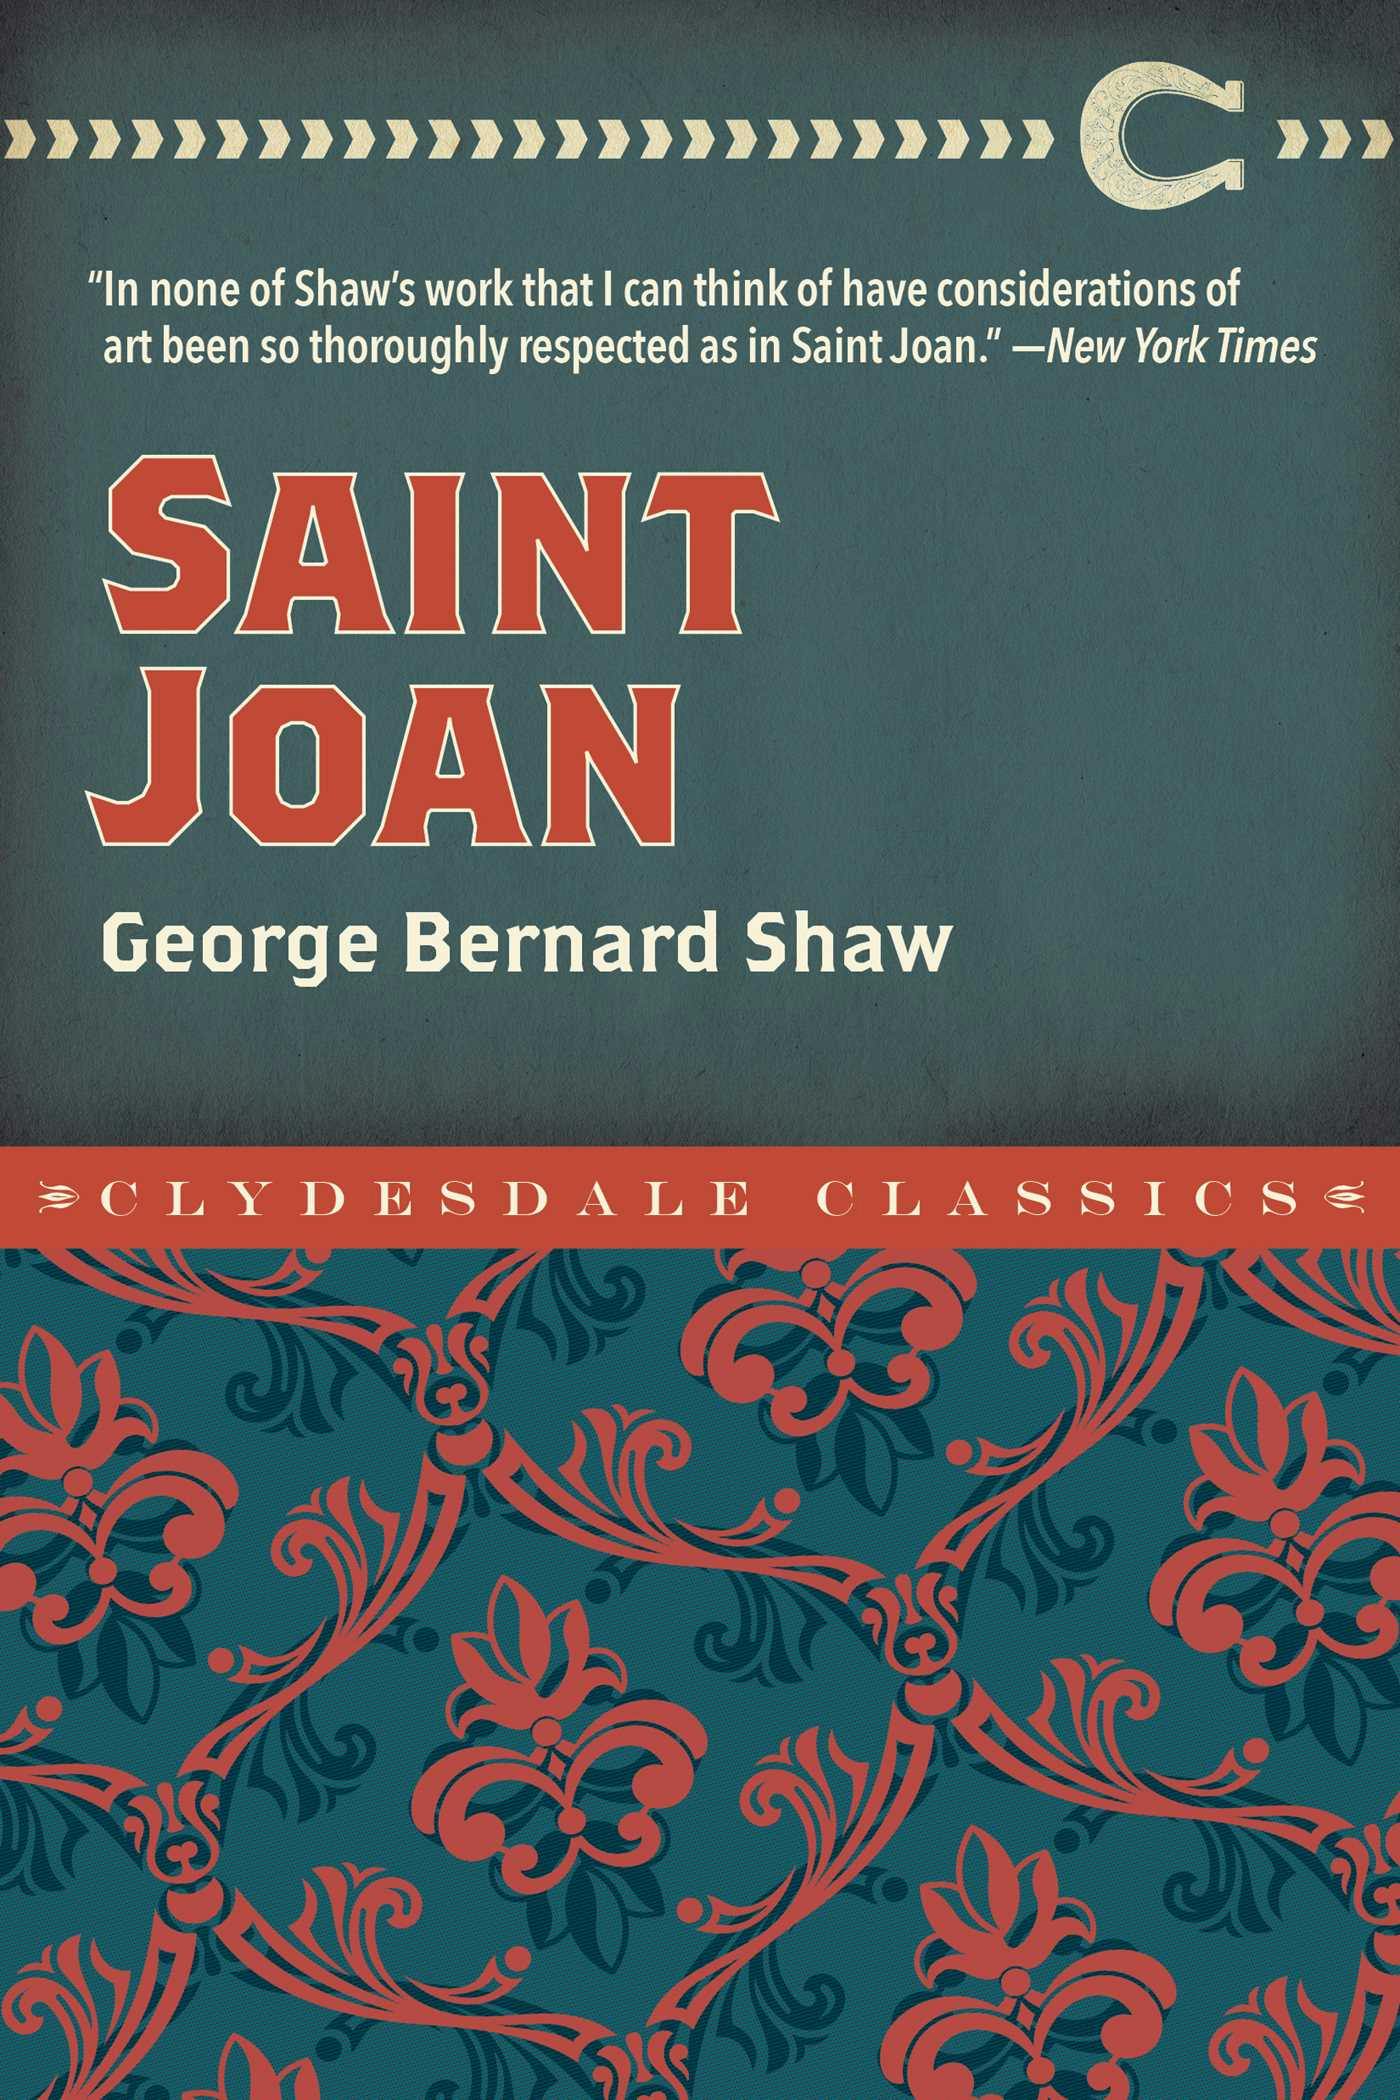 Saint Joan - George Bernard Shaw